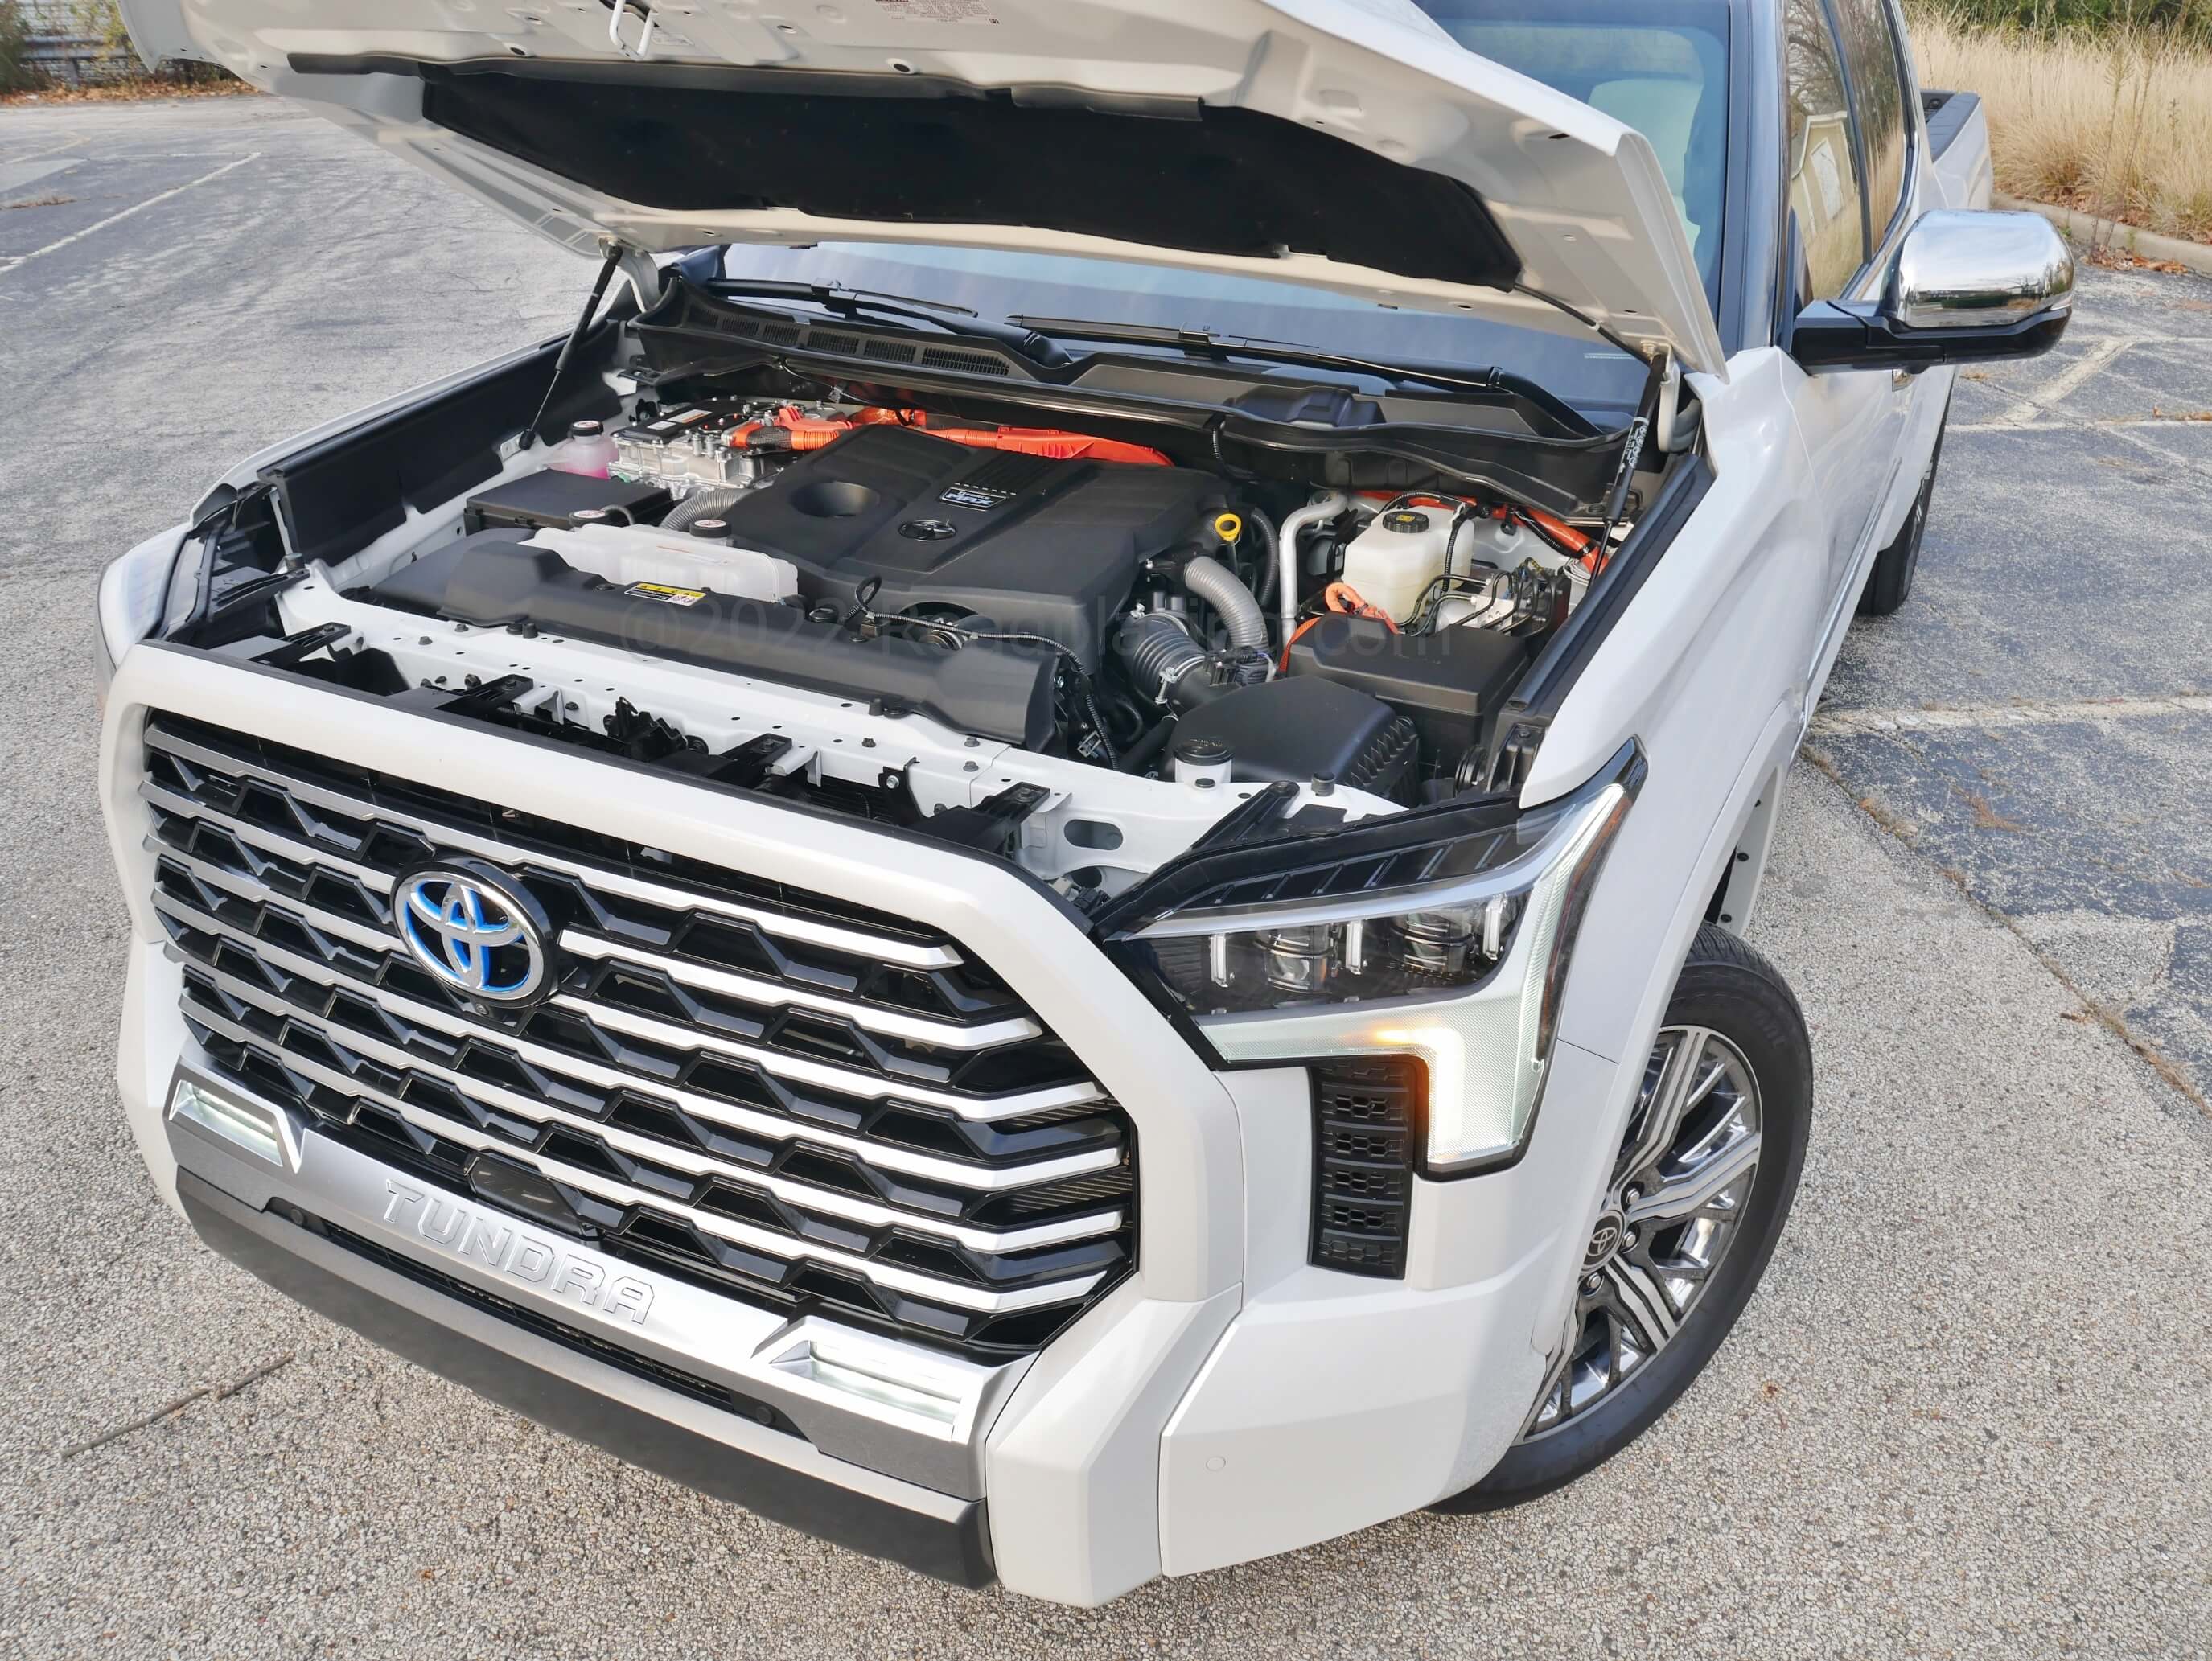 2022 Toyota Tundra CrewCab Capstone 4x4: potent new iForceMax hybrid electric turbo V-6 makes class leading diesel like 583 lb-ft torque